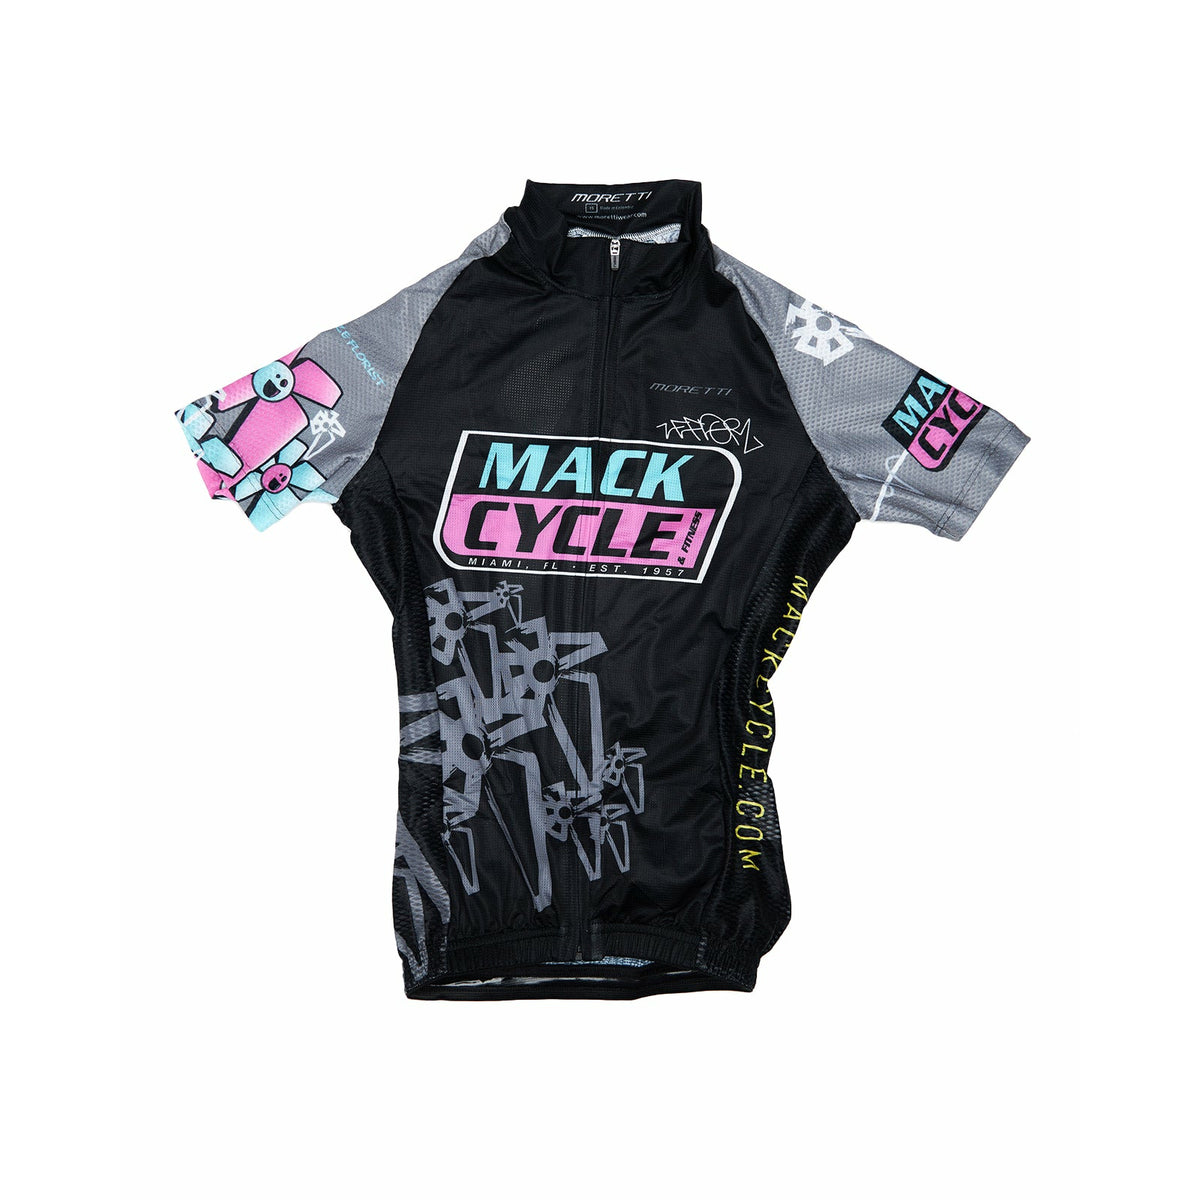 Mack Cycle x ZeFlorist - Kid's Cycling Jersey